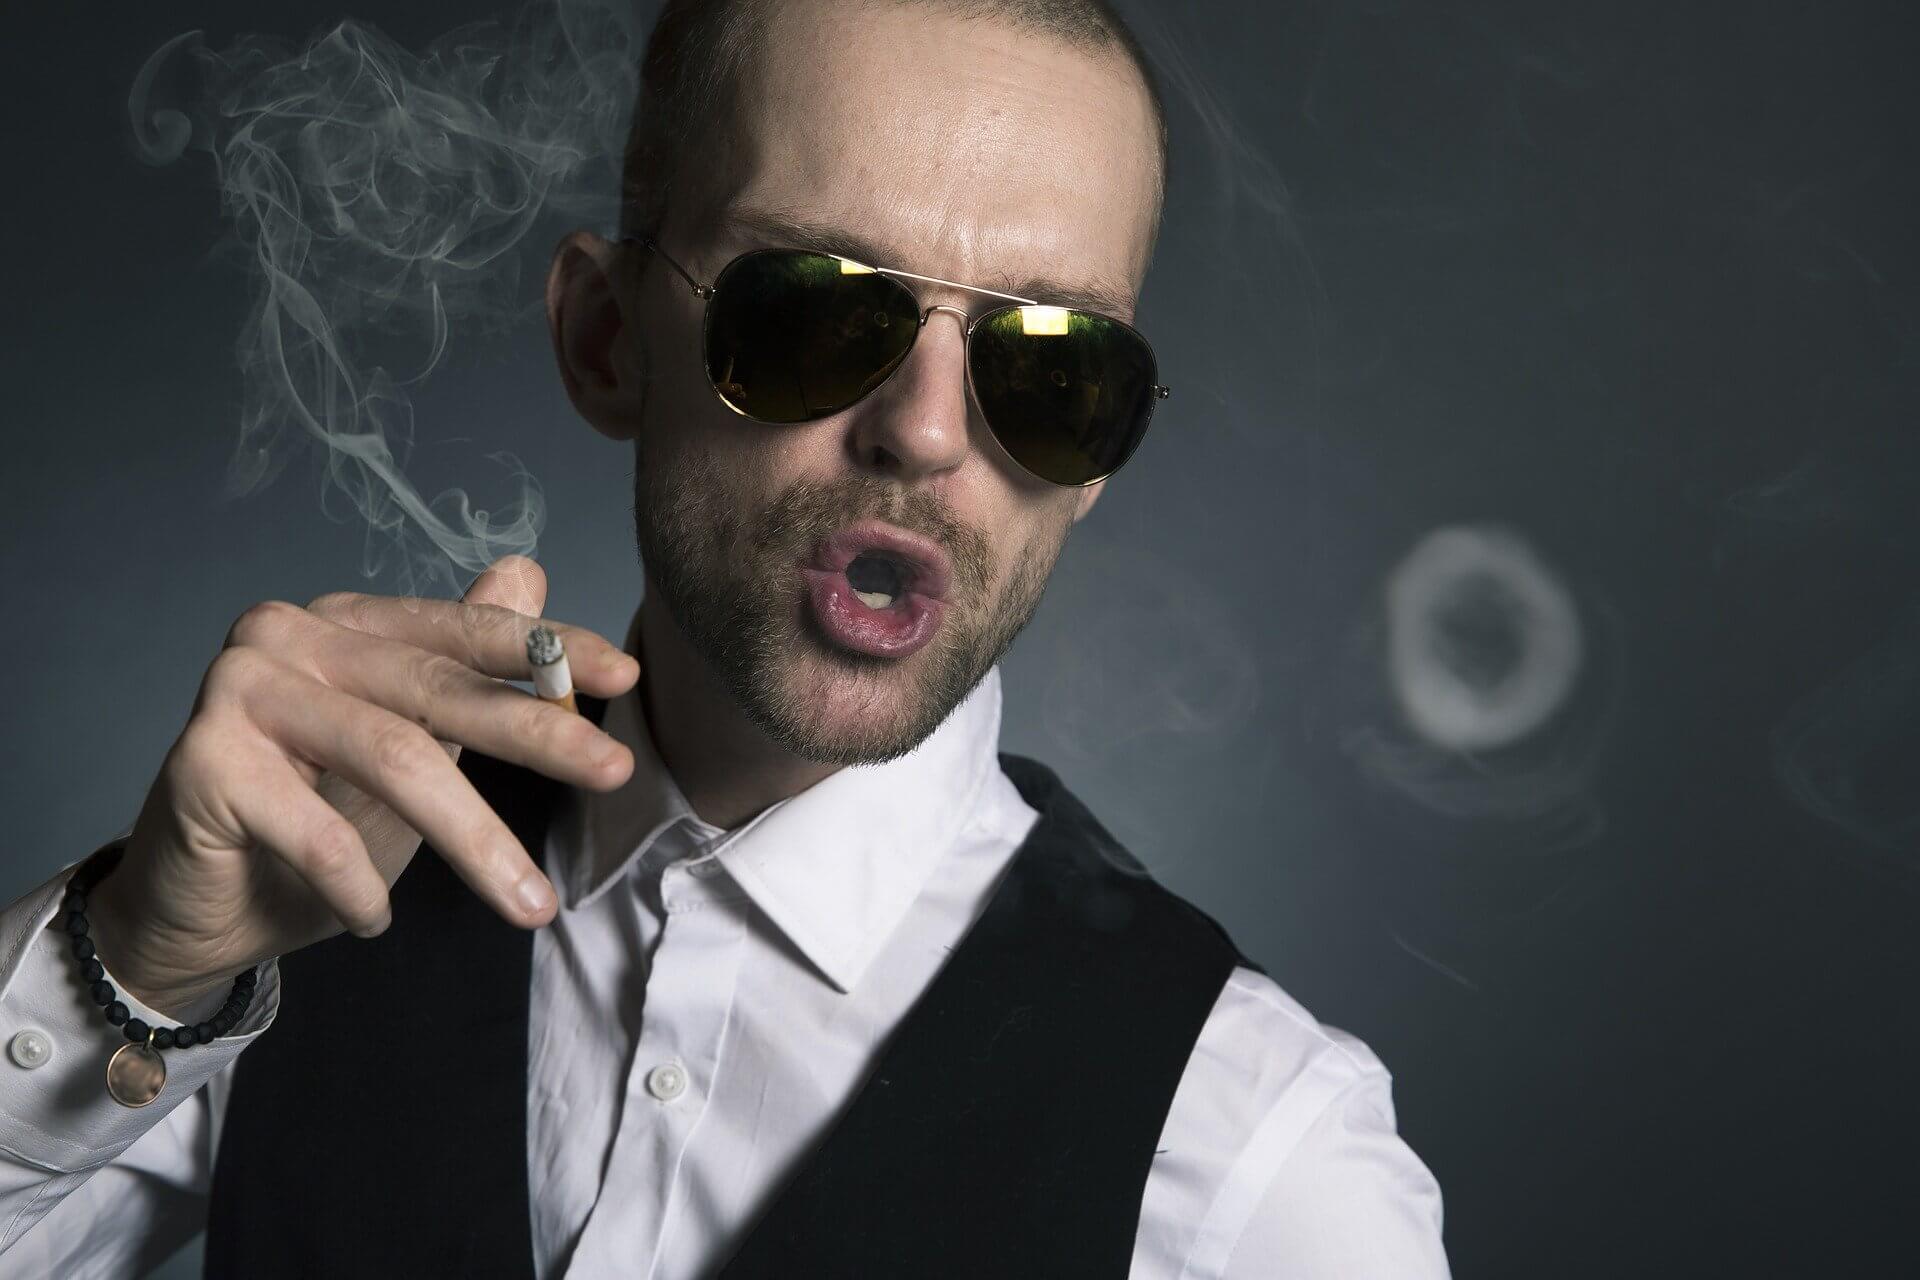 Narcisstic man smoking a cigarette